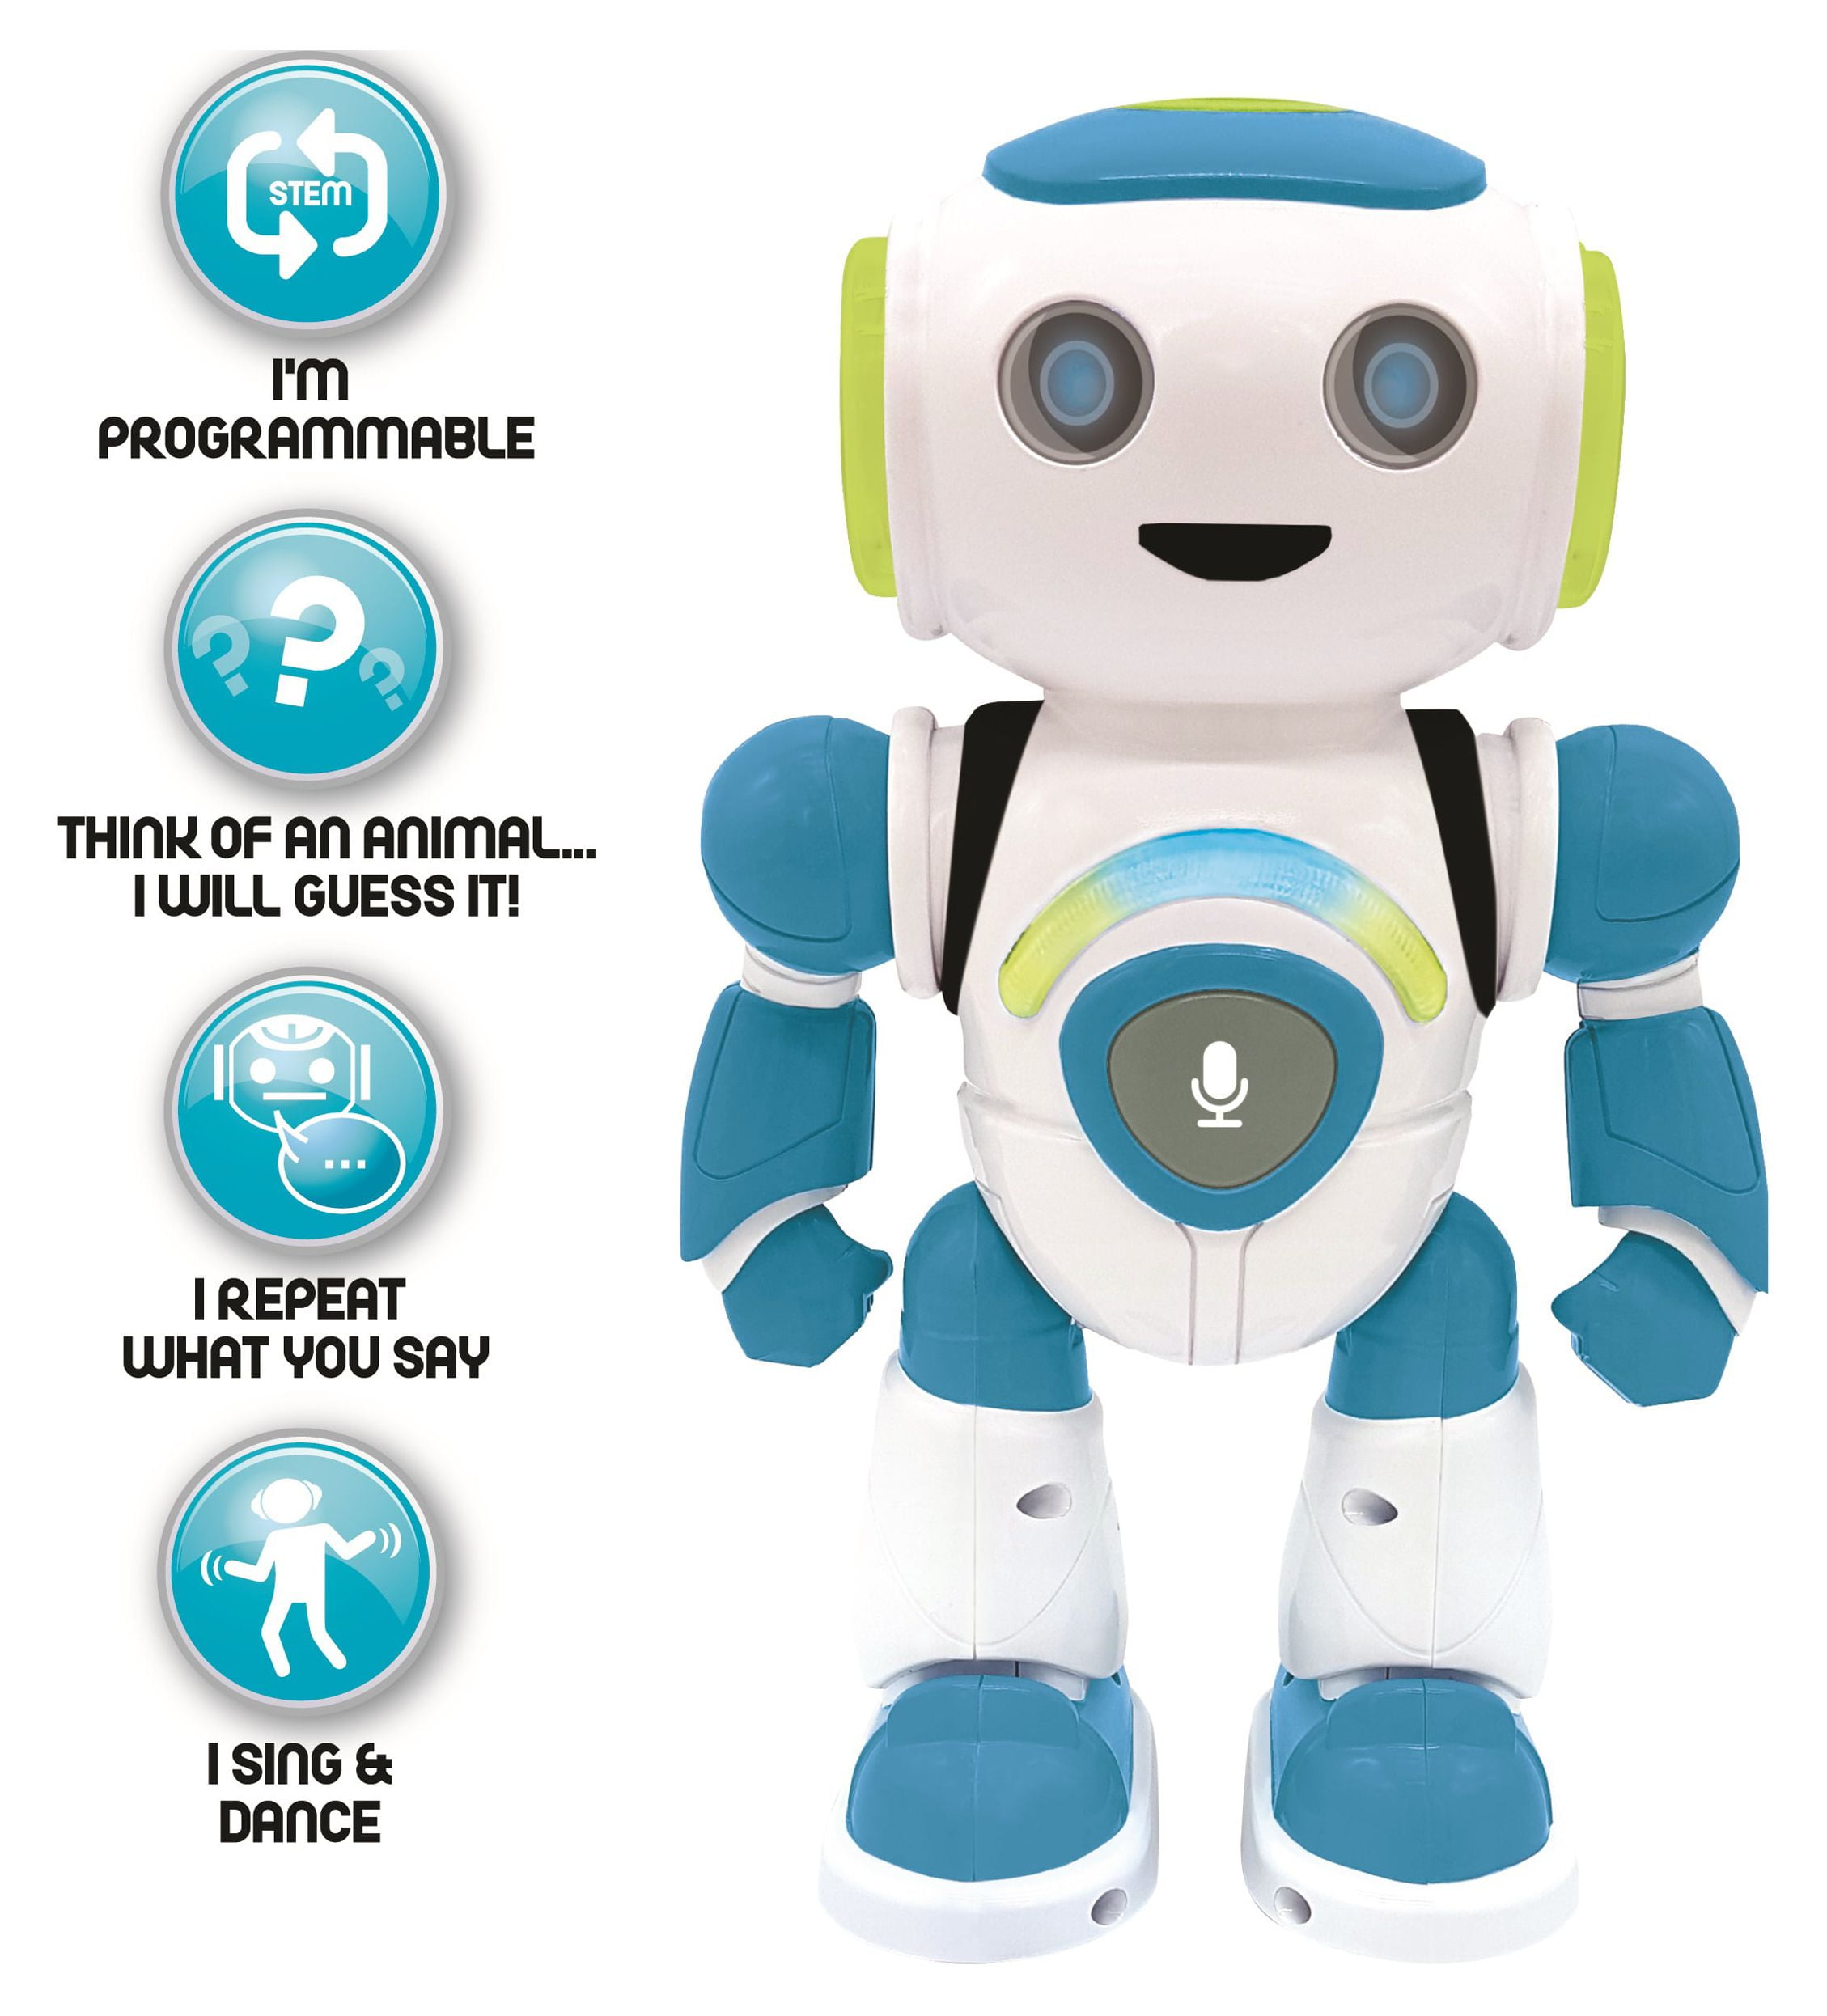 Lexibook - Powerman® First STEM robot, dance, music, demo incl remote  control 